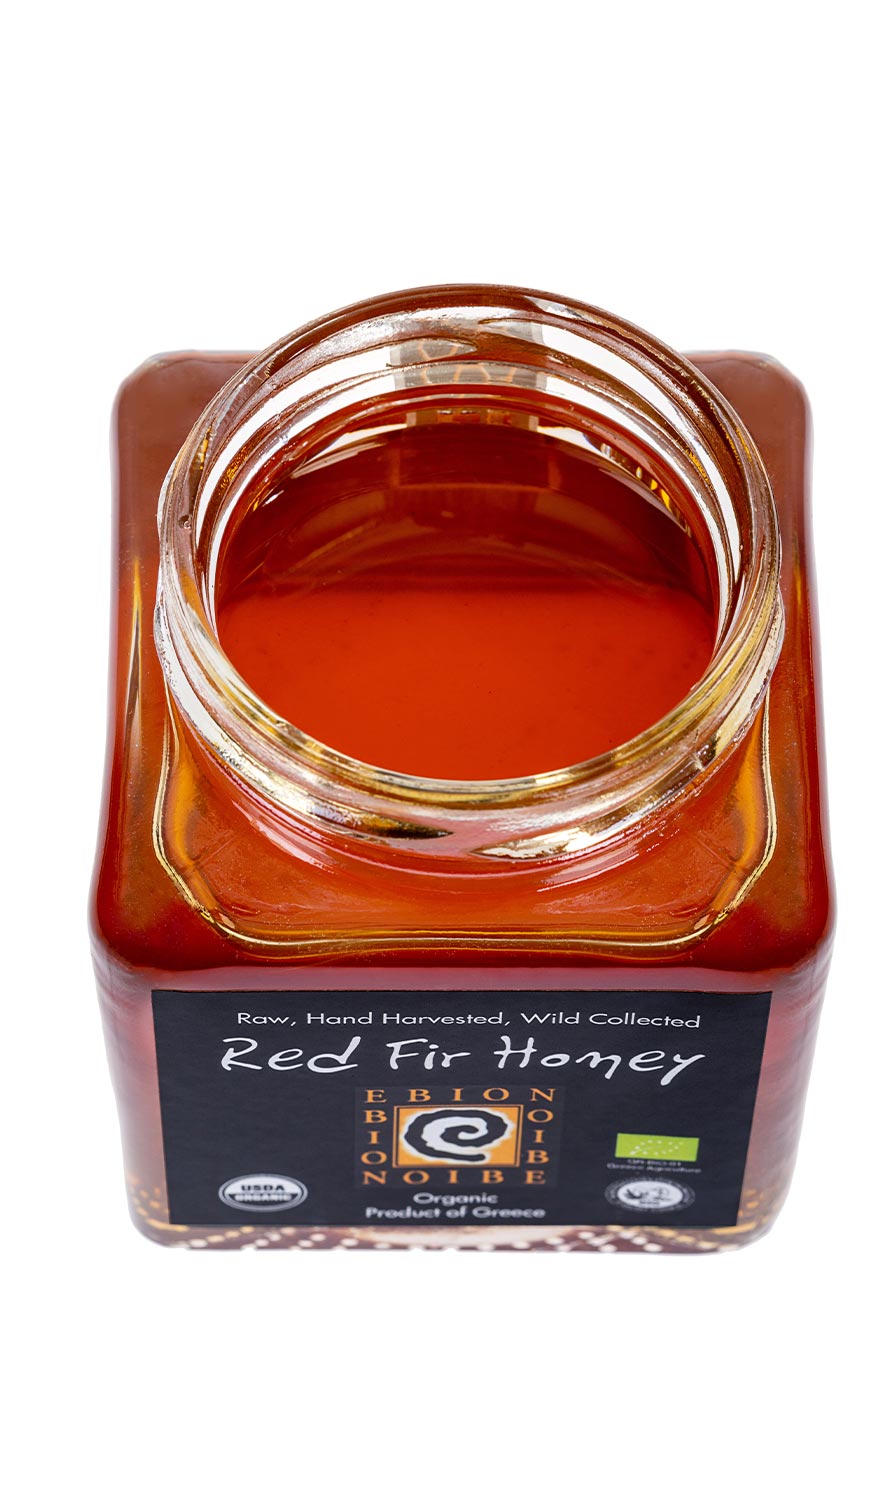 Red Fir Honey - Wild RAW Organic Greek Mountain Honey